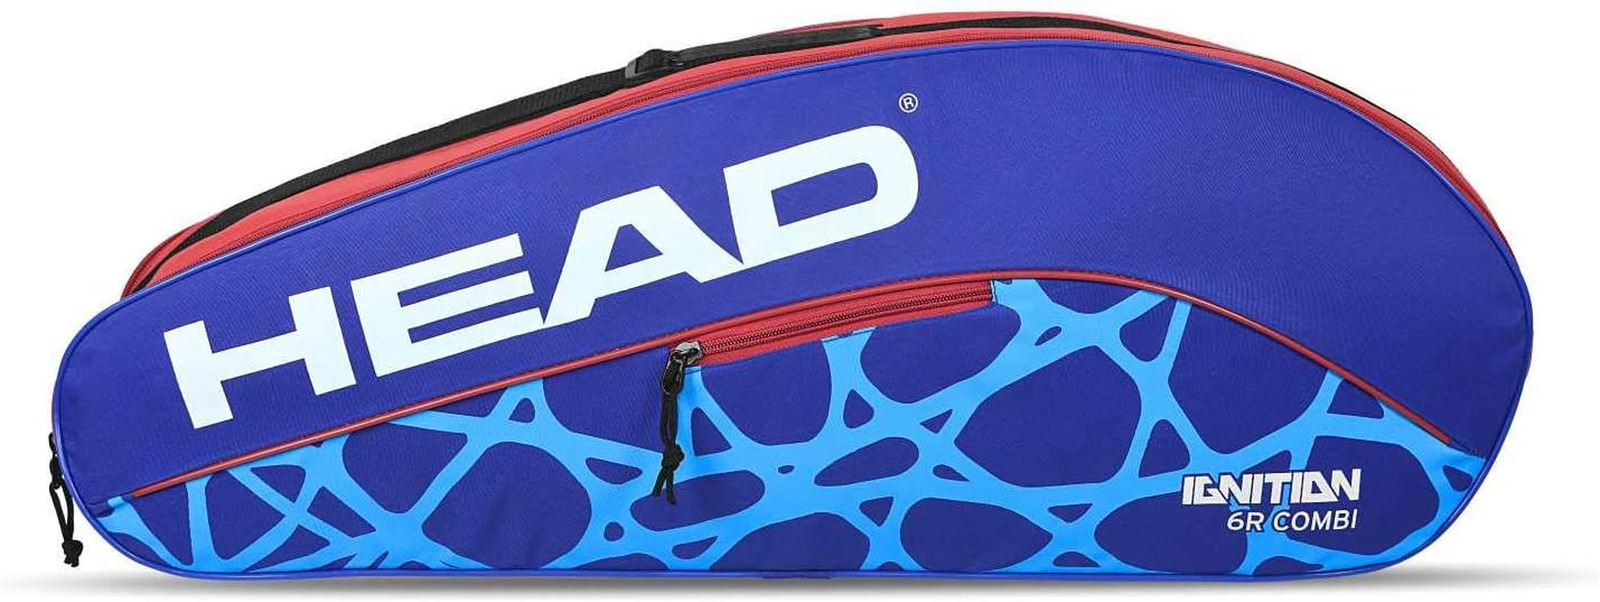 Ignition 6R Combi Polyester Badminton Kit Bag (Blue/Red, Large) | Dedicated Comp